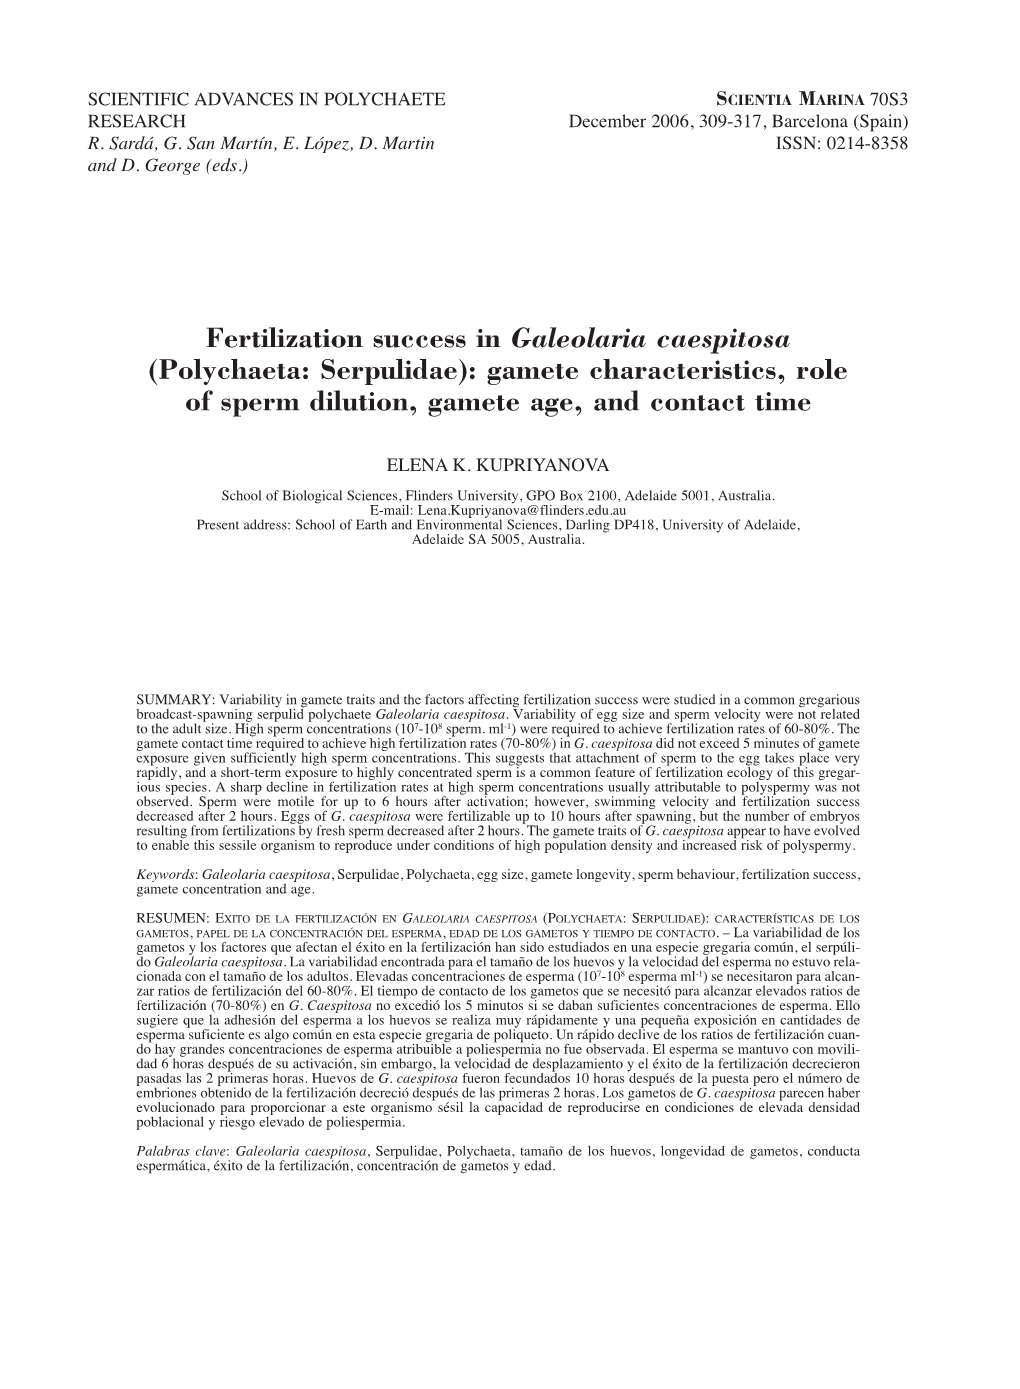 Fertilization Success in Galeolaria Caespitosa (Polychaeta: Serpulidae): Gamete Characteristics, Role of Sperm Dilution, Gamete Age, and Contact Time